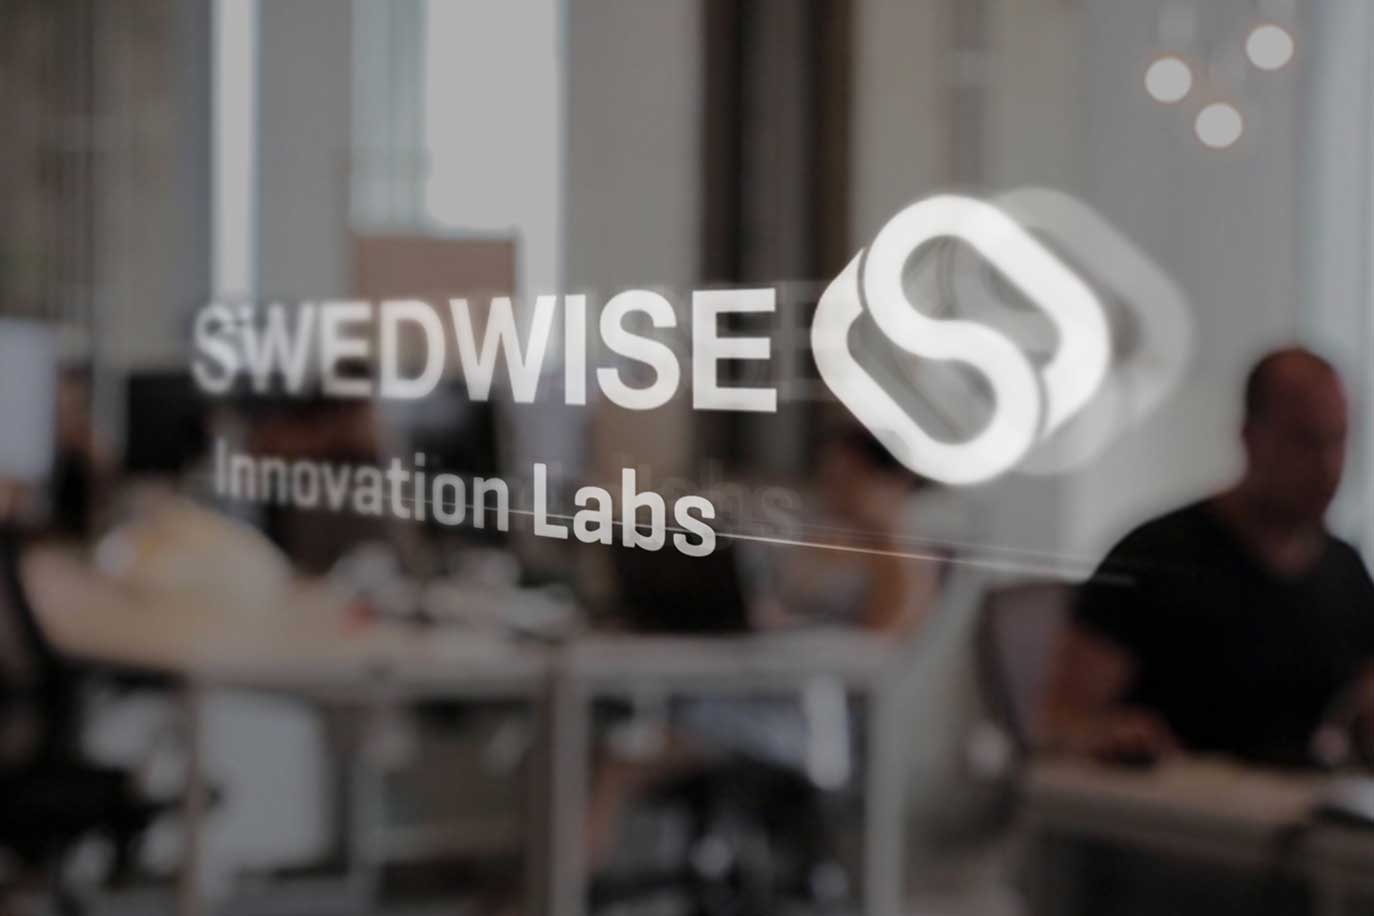 Swedwise innovation labs